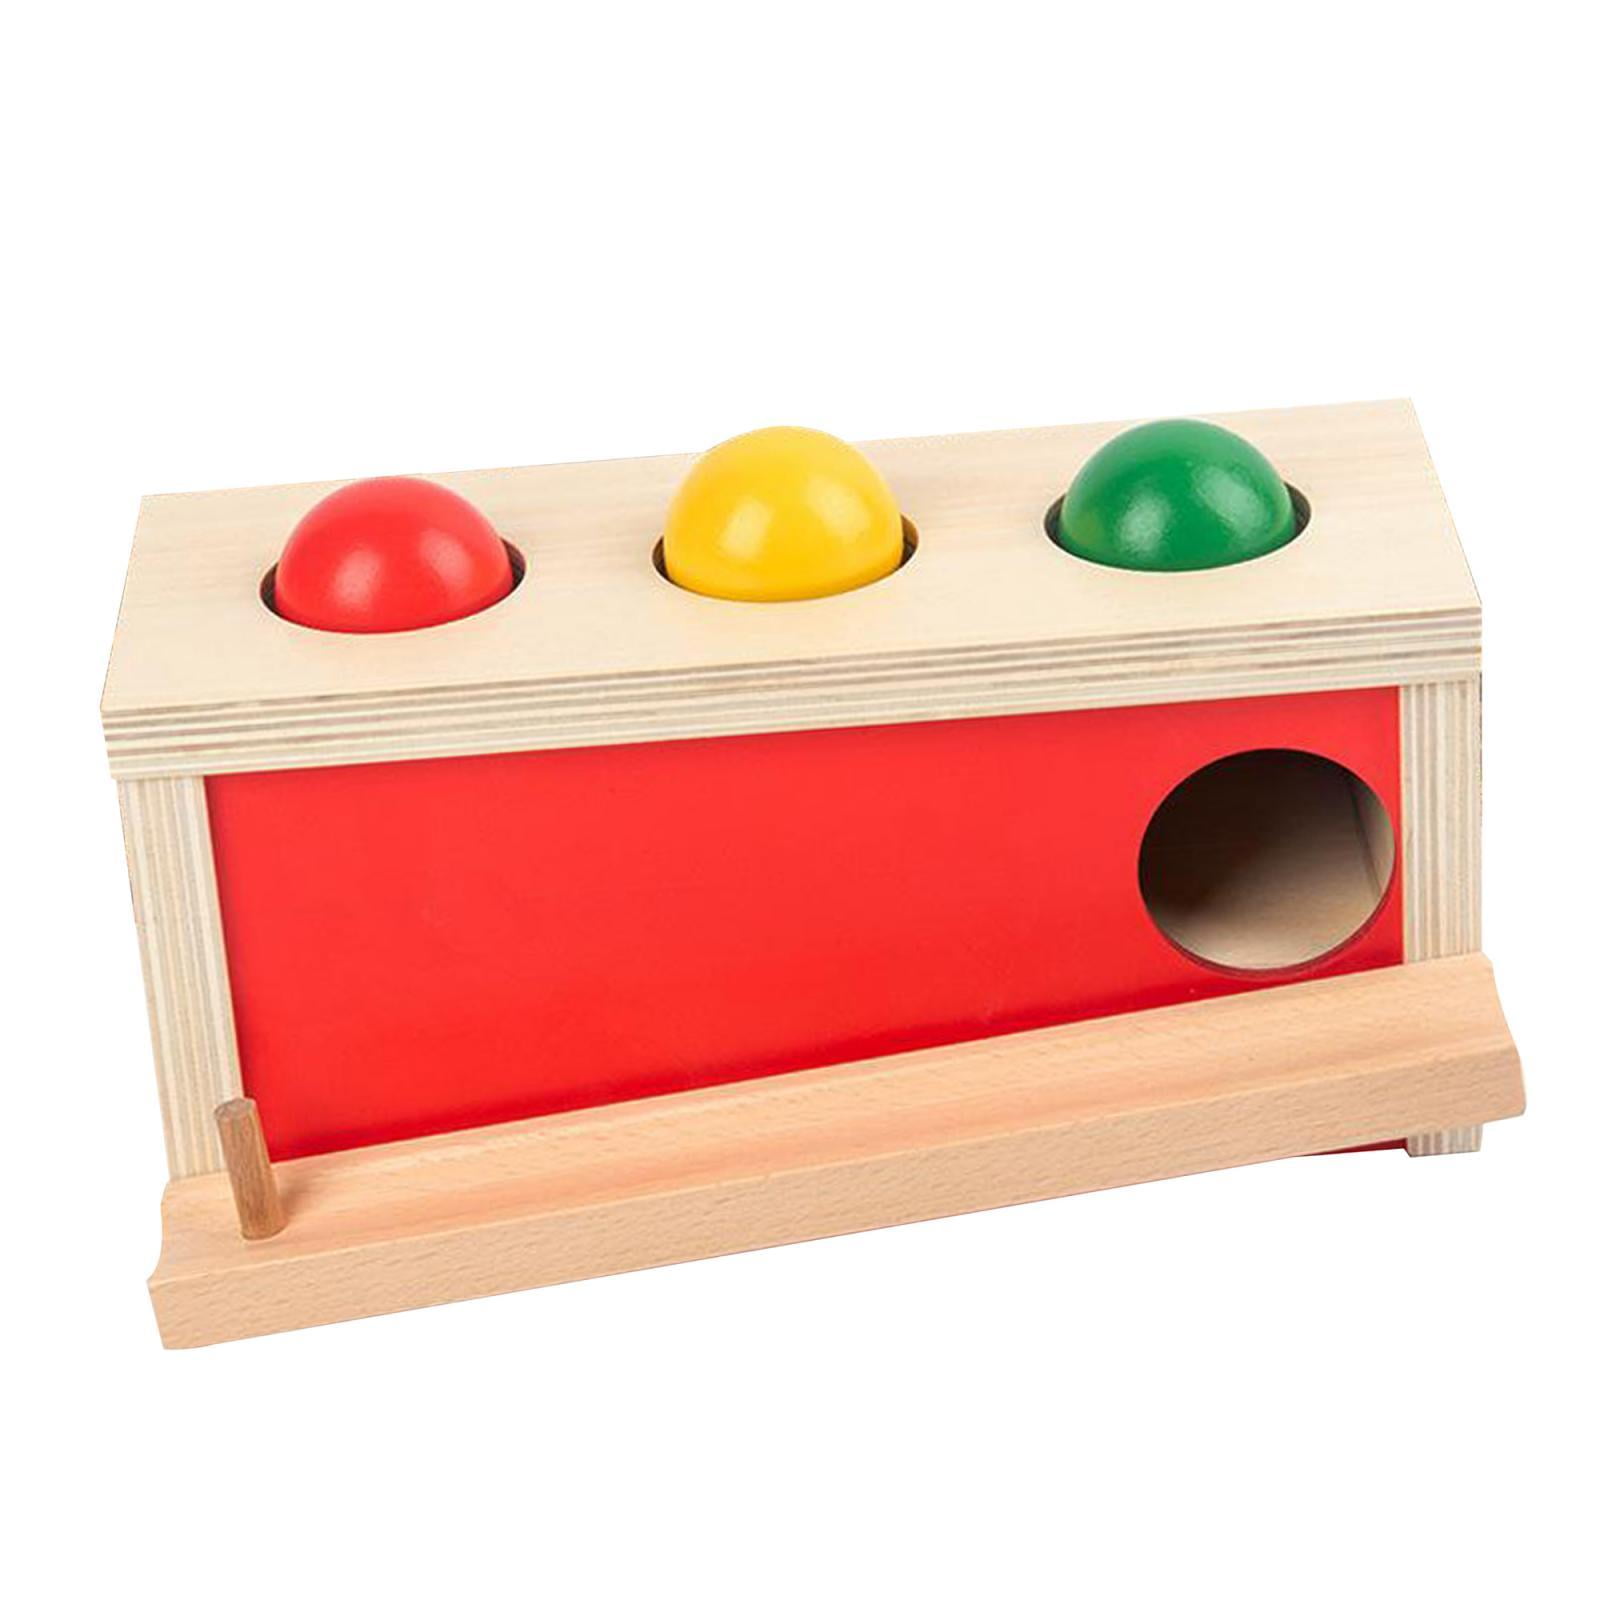 Details about   Montessori Object Permanence Box Infant Development Ball Drop Toys for Babies 